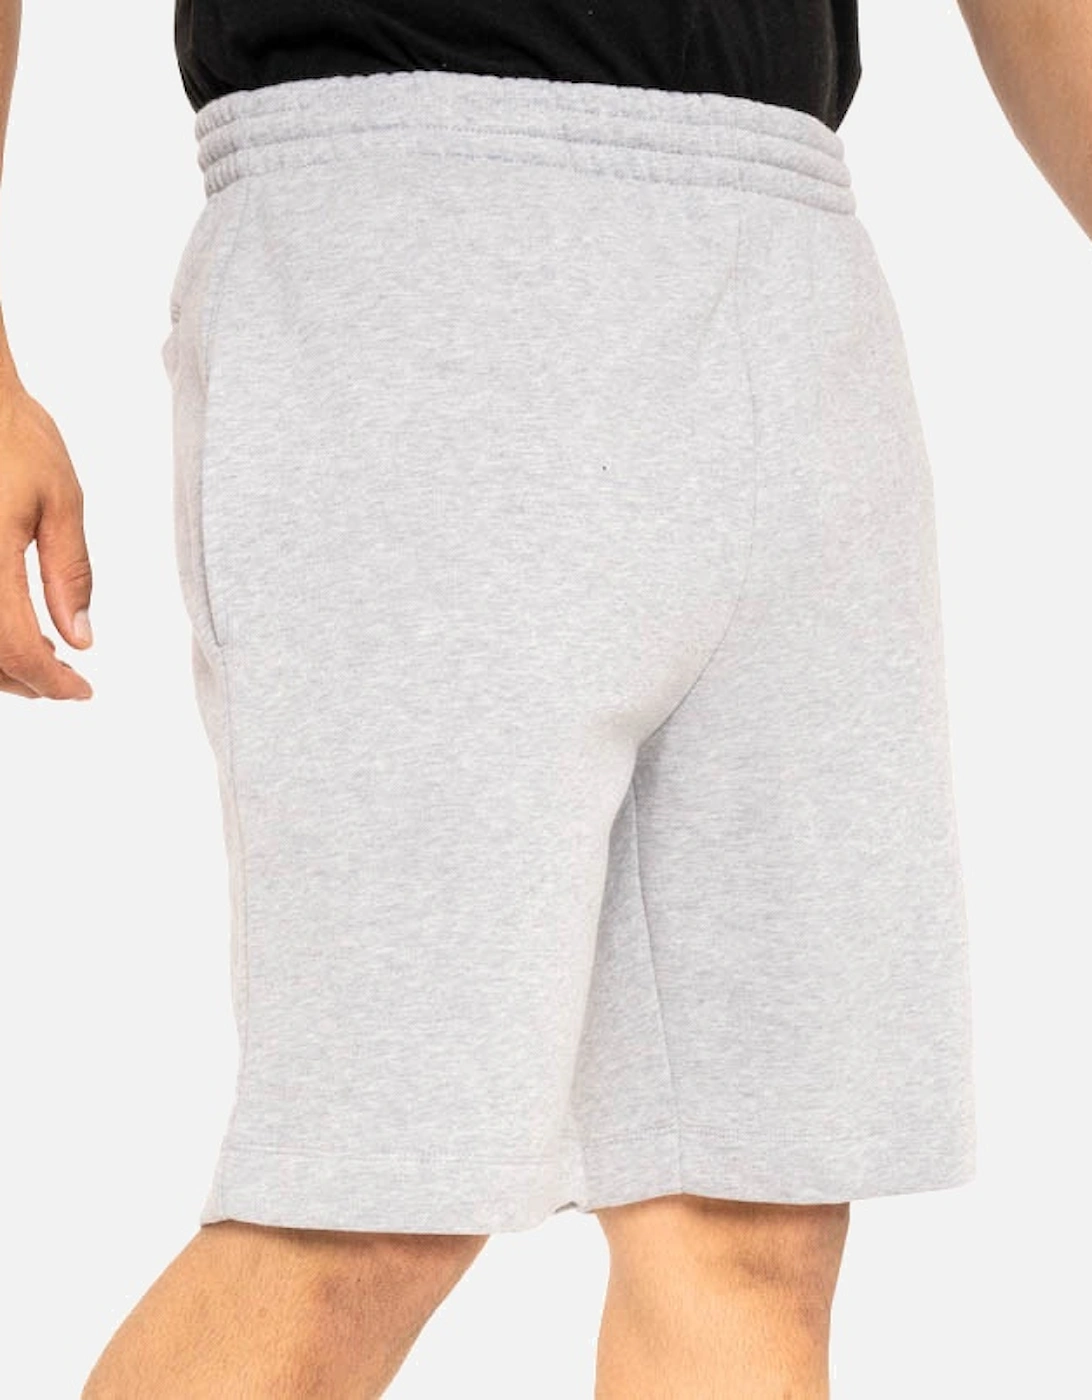 Mens Fleece Shorts (Grey)